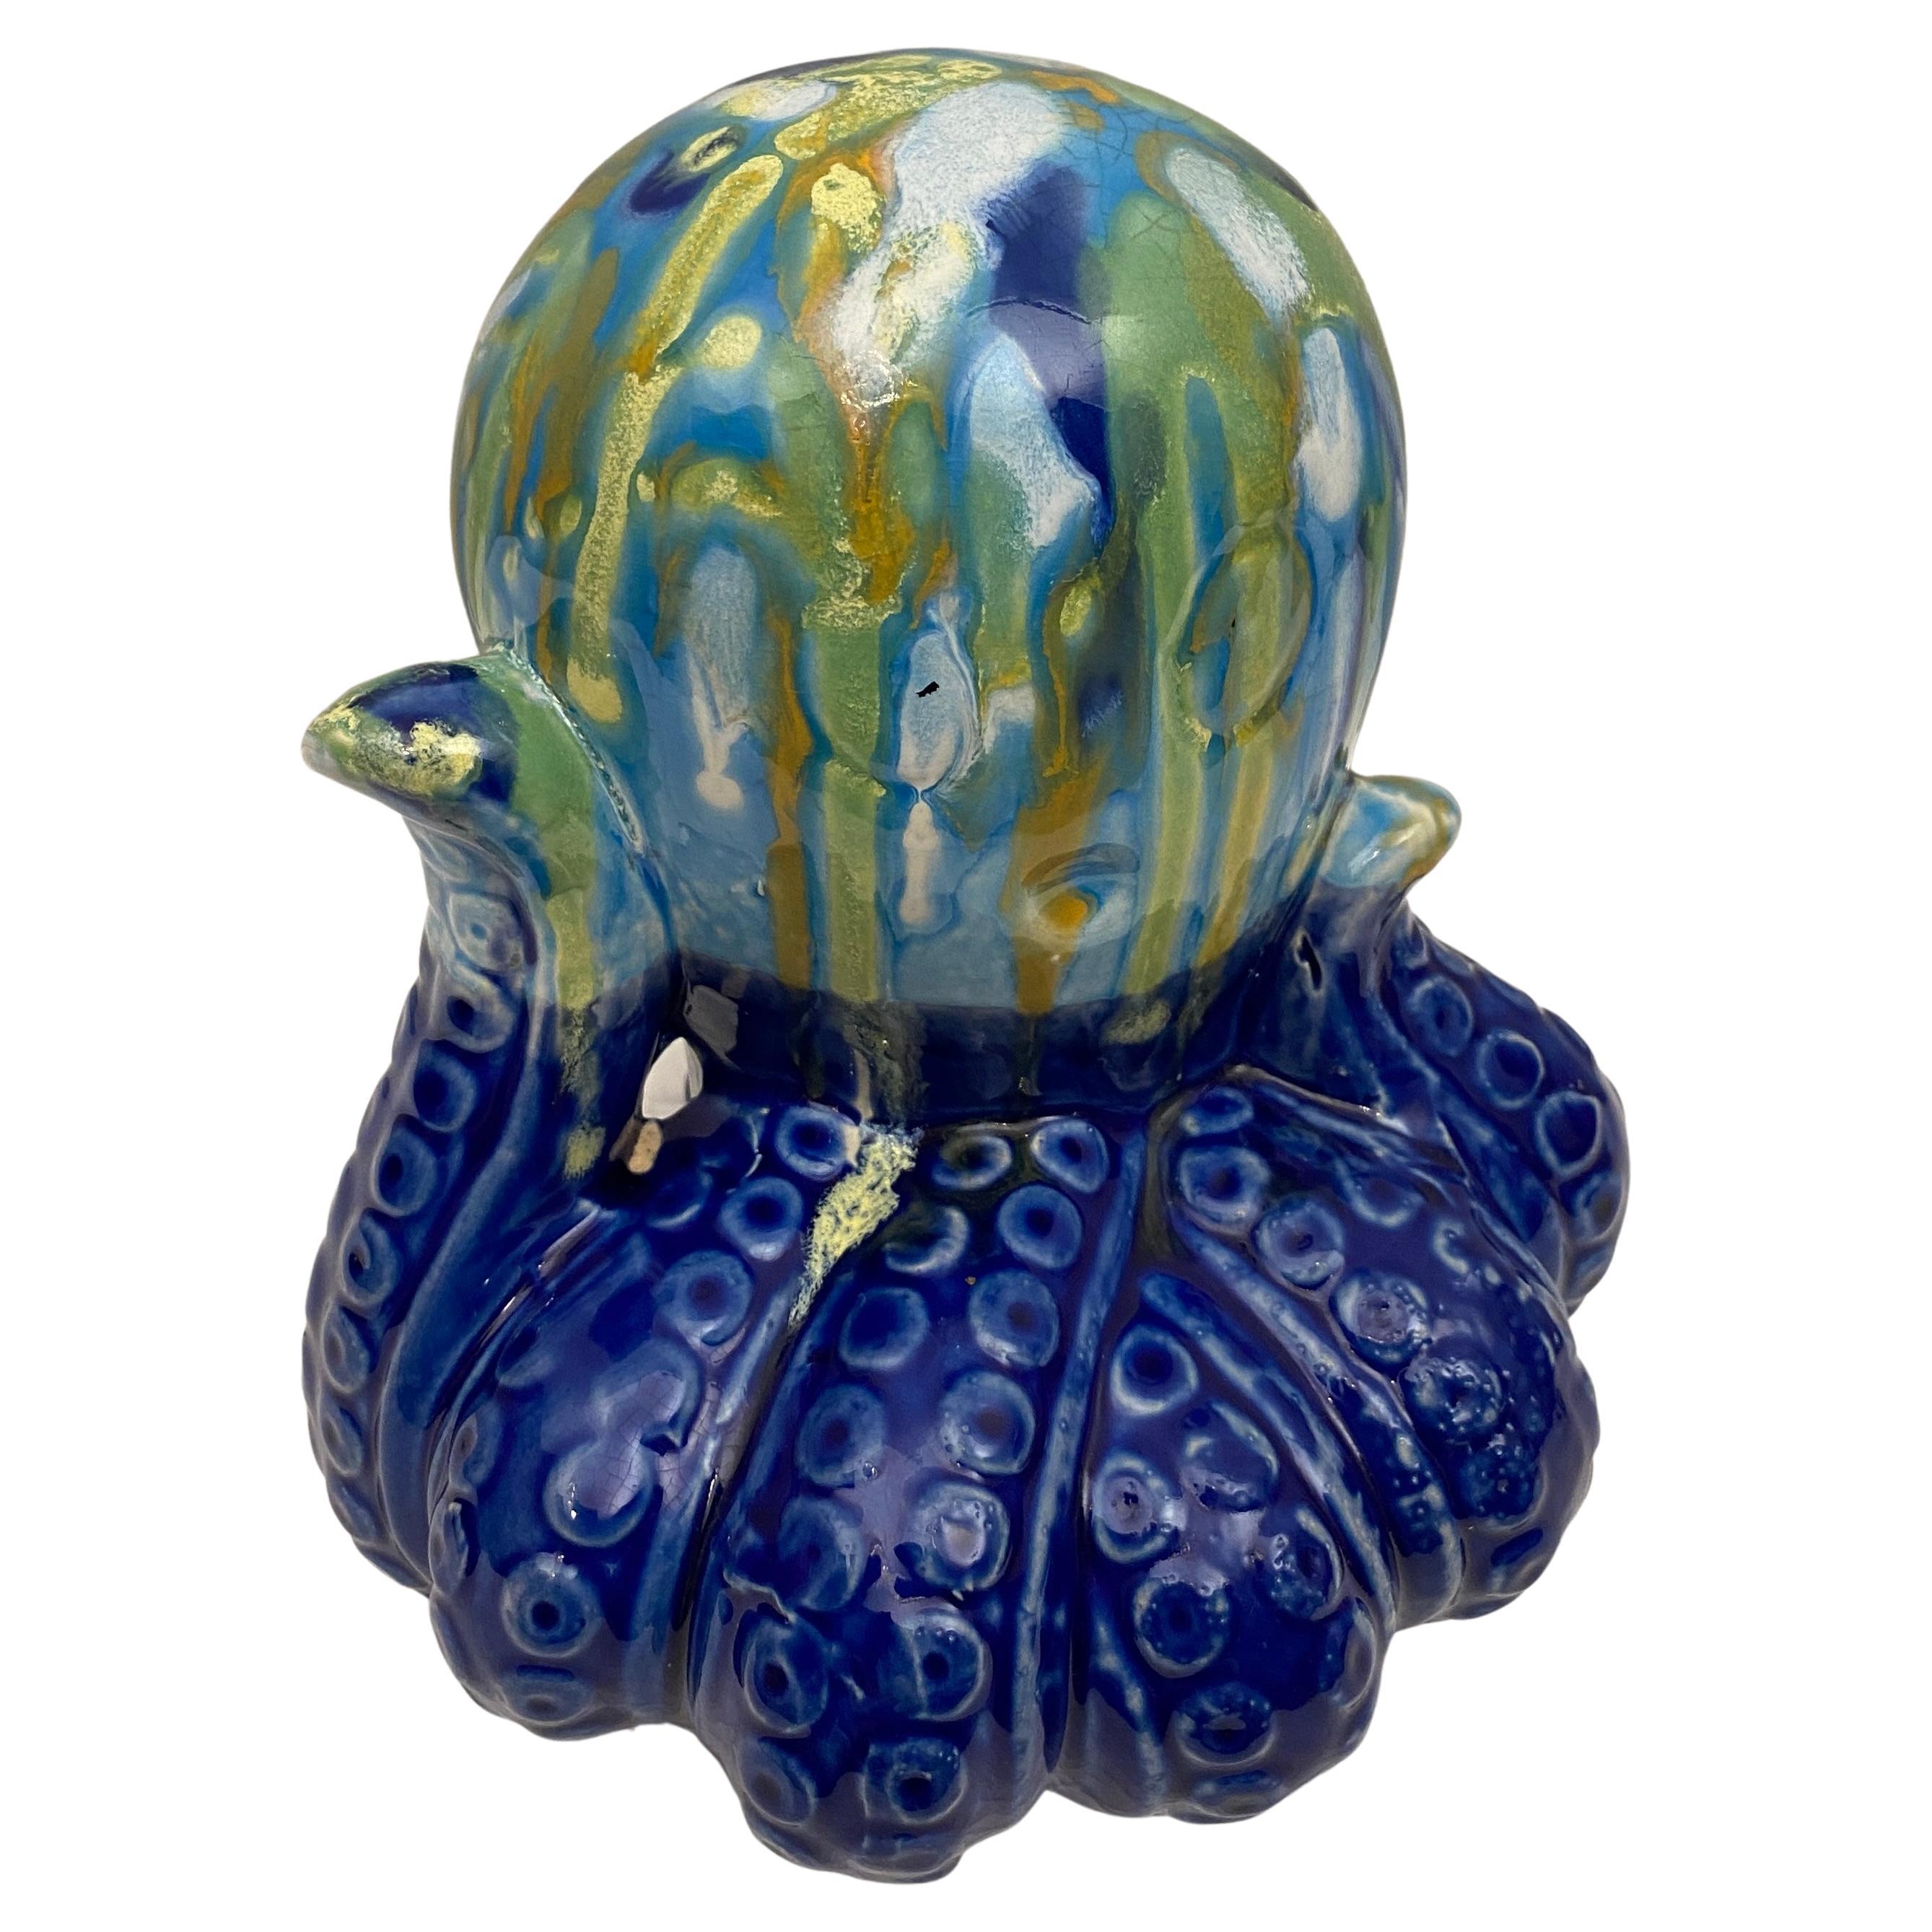 Octopus aus Keramik mit Skulpturen